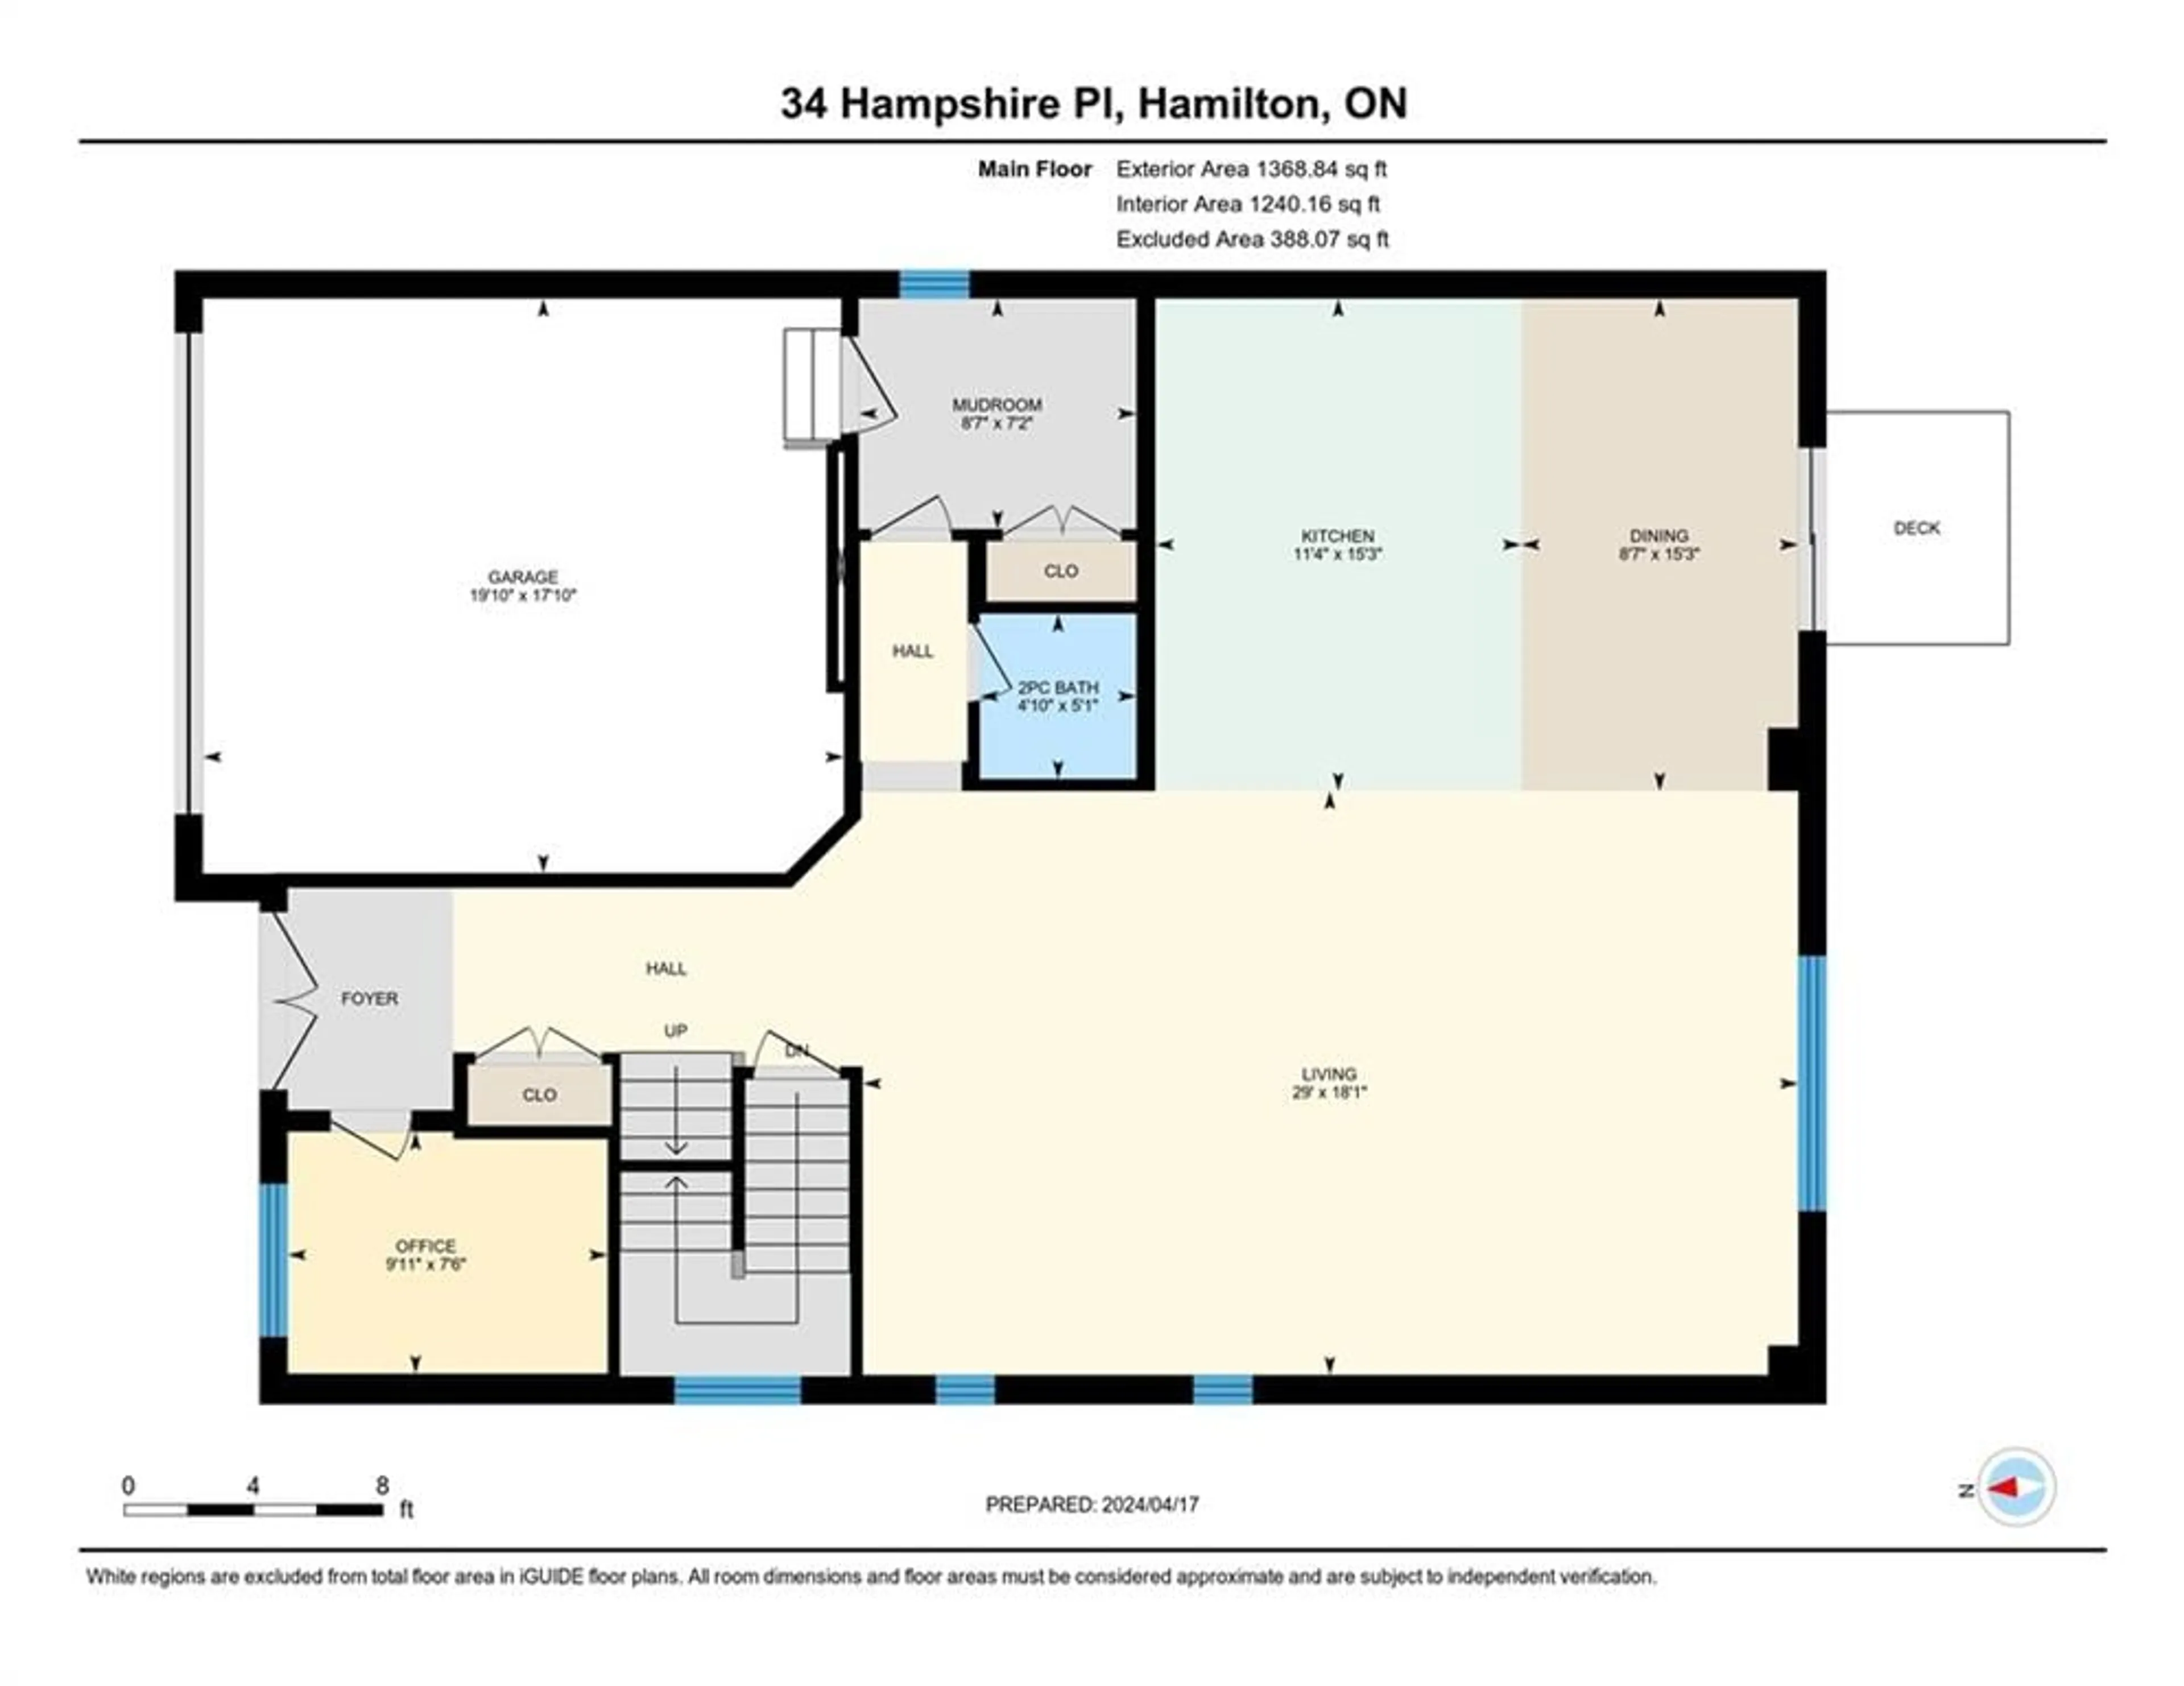 Floor plan for 34 HAMPSHIRE Pl, Stoney Creek Ontario L8J 2V3